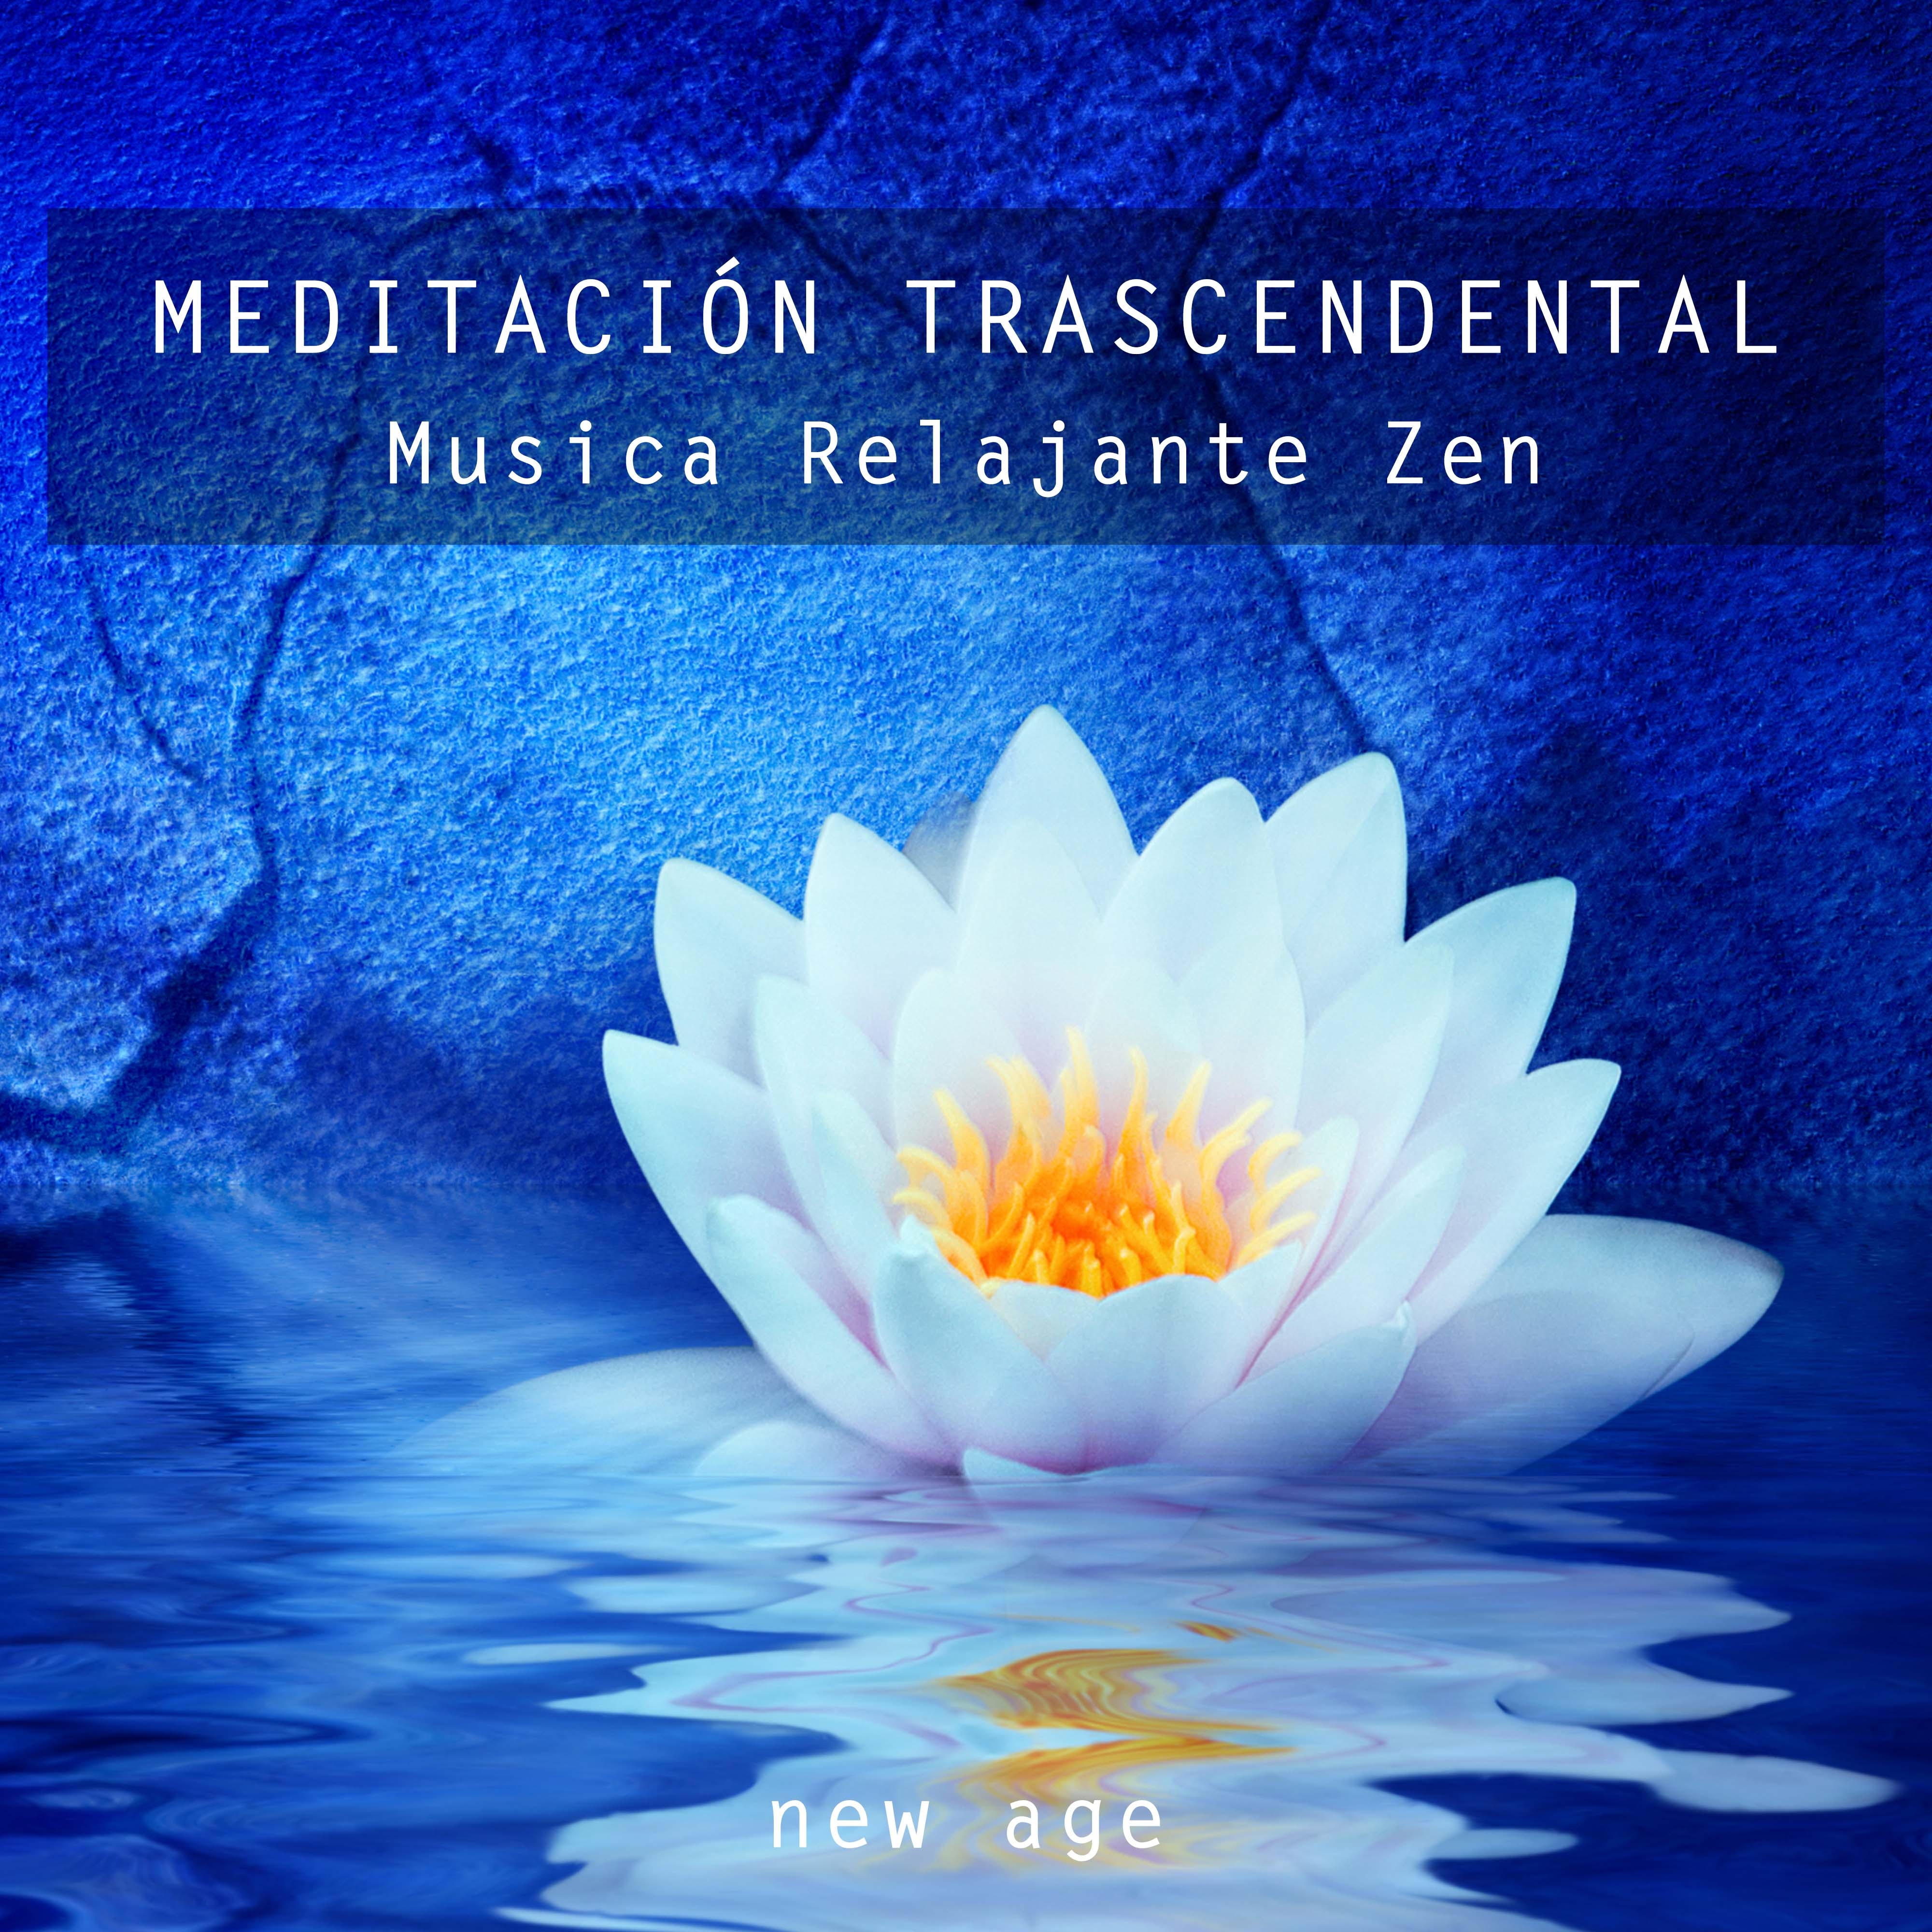 Meditacio n Trascendental  Musica Relajante Zen